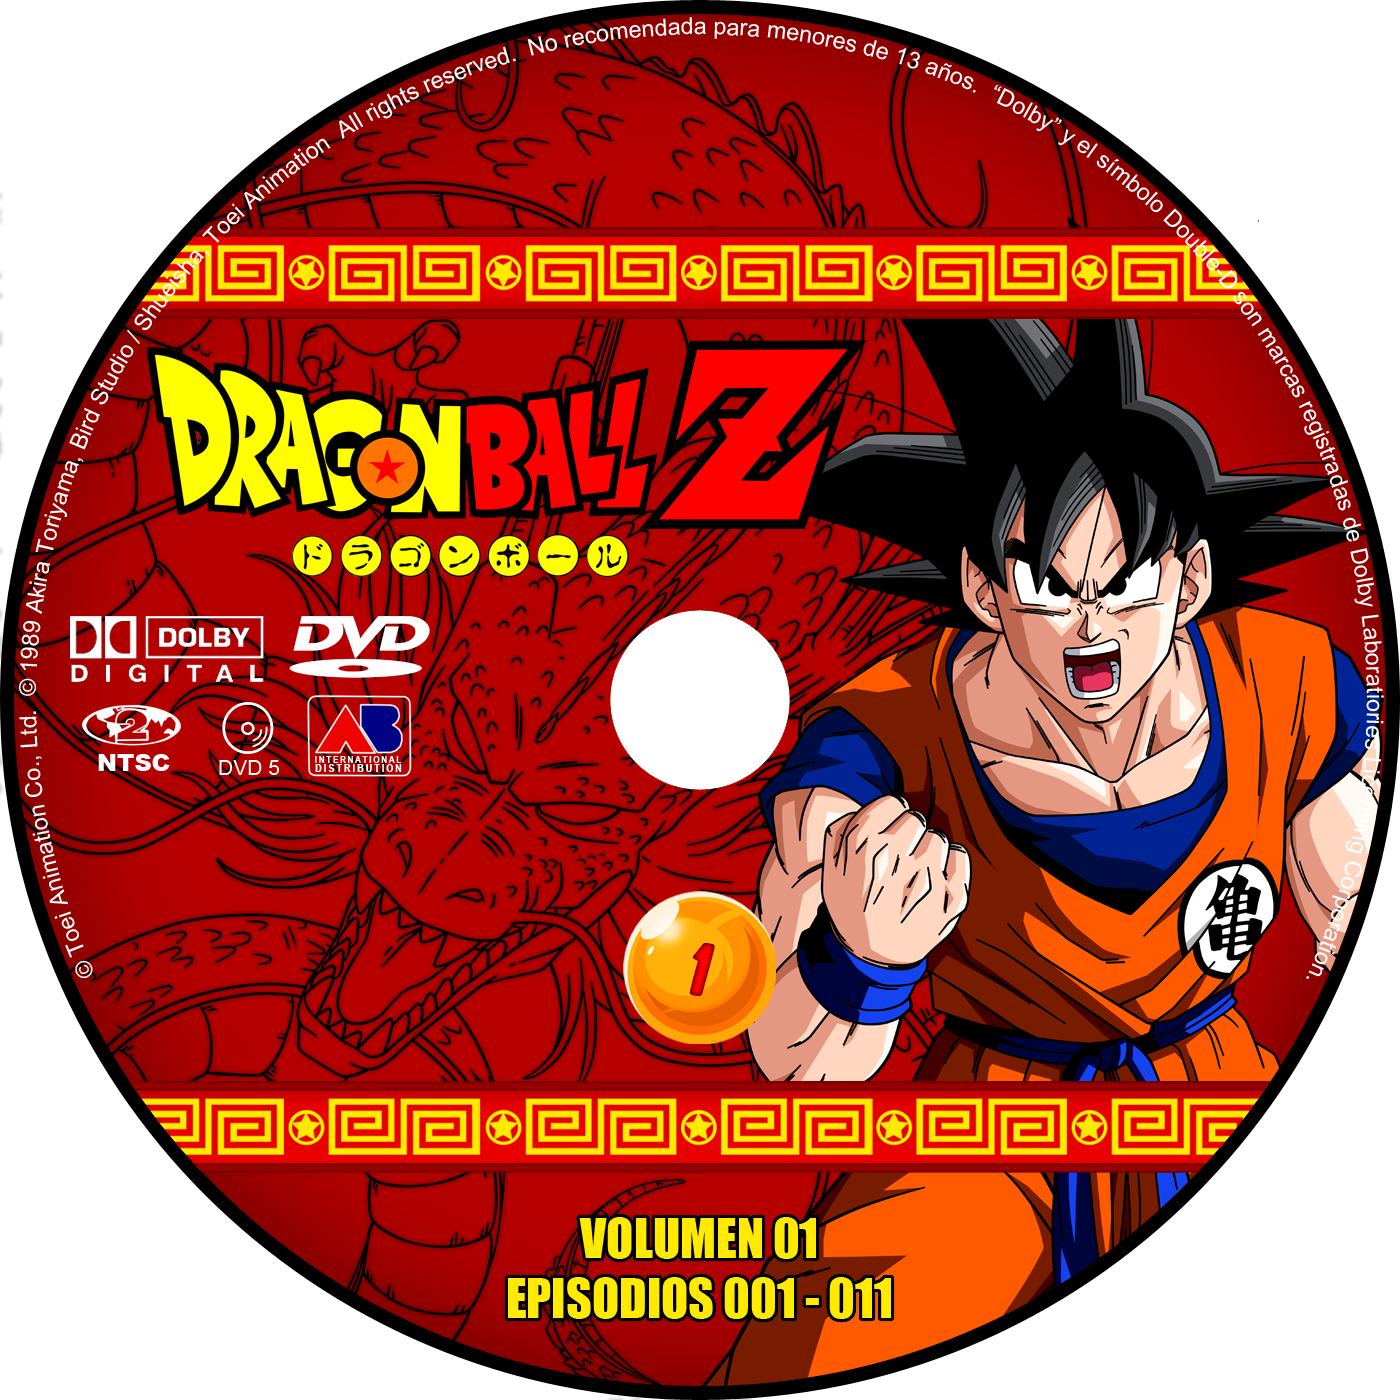 Dragonball Custom DVD Cover DOWNLOAD Episode of Bardock 